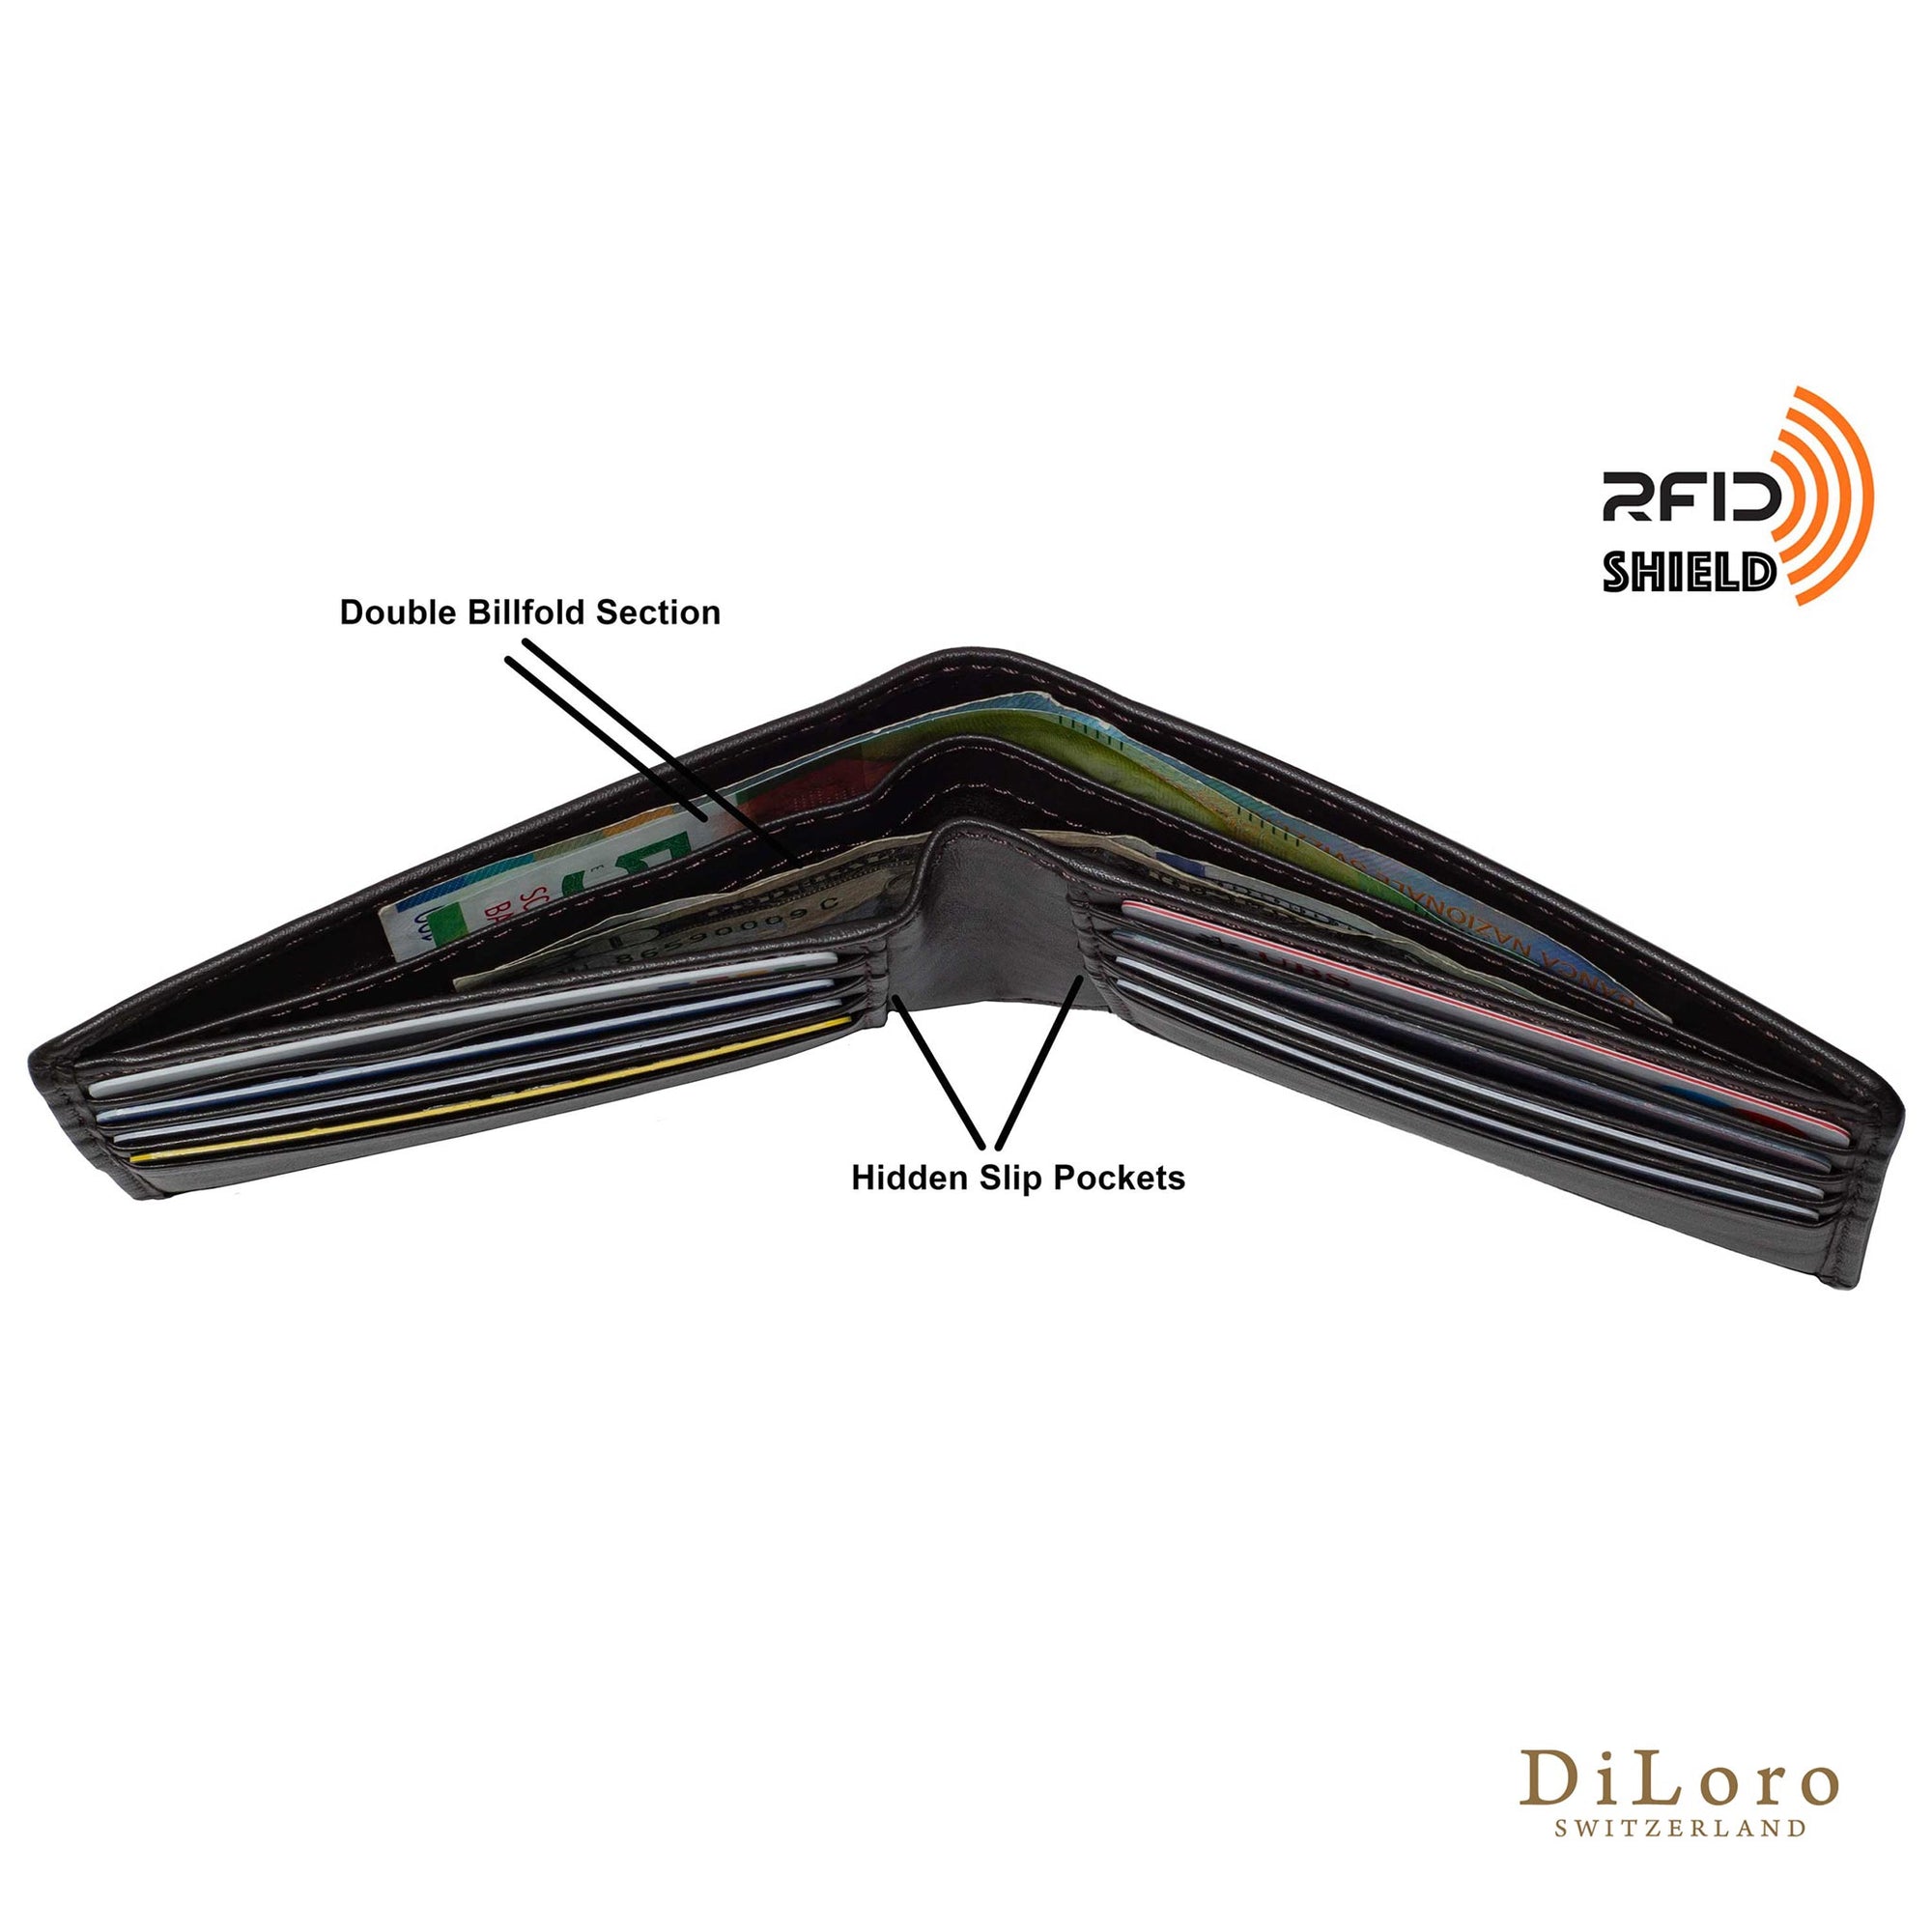 Wallet by DiLoro Italy Leather Ultra Slim Bifold Mens Wallet RFID Blocking - Dark Brown (double billfold view & slip pockets)